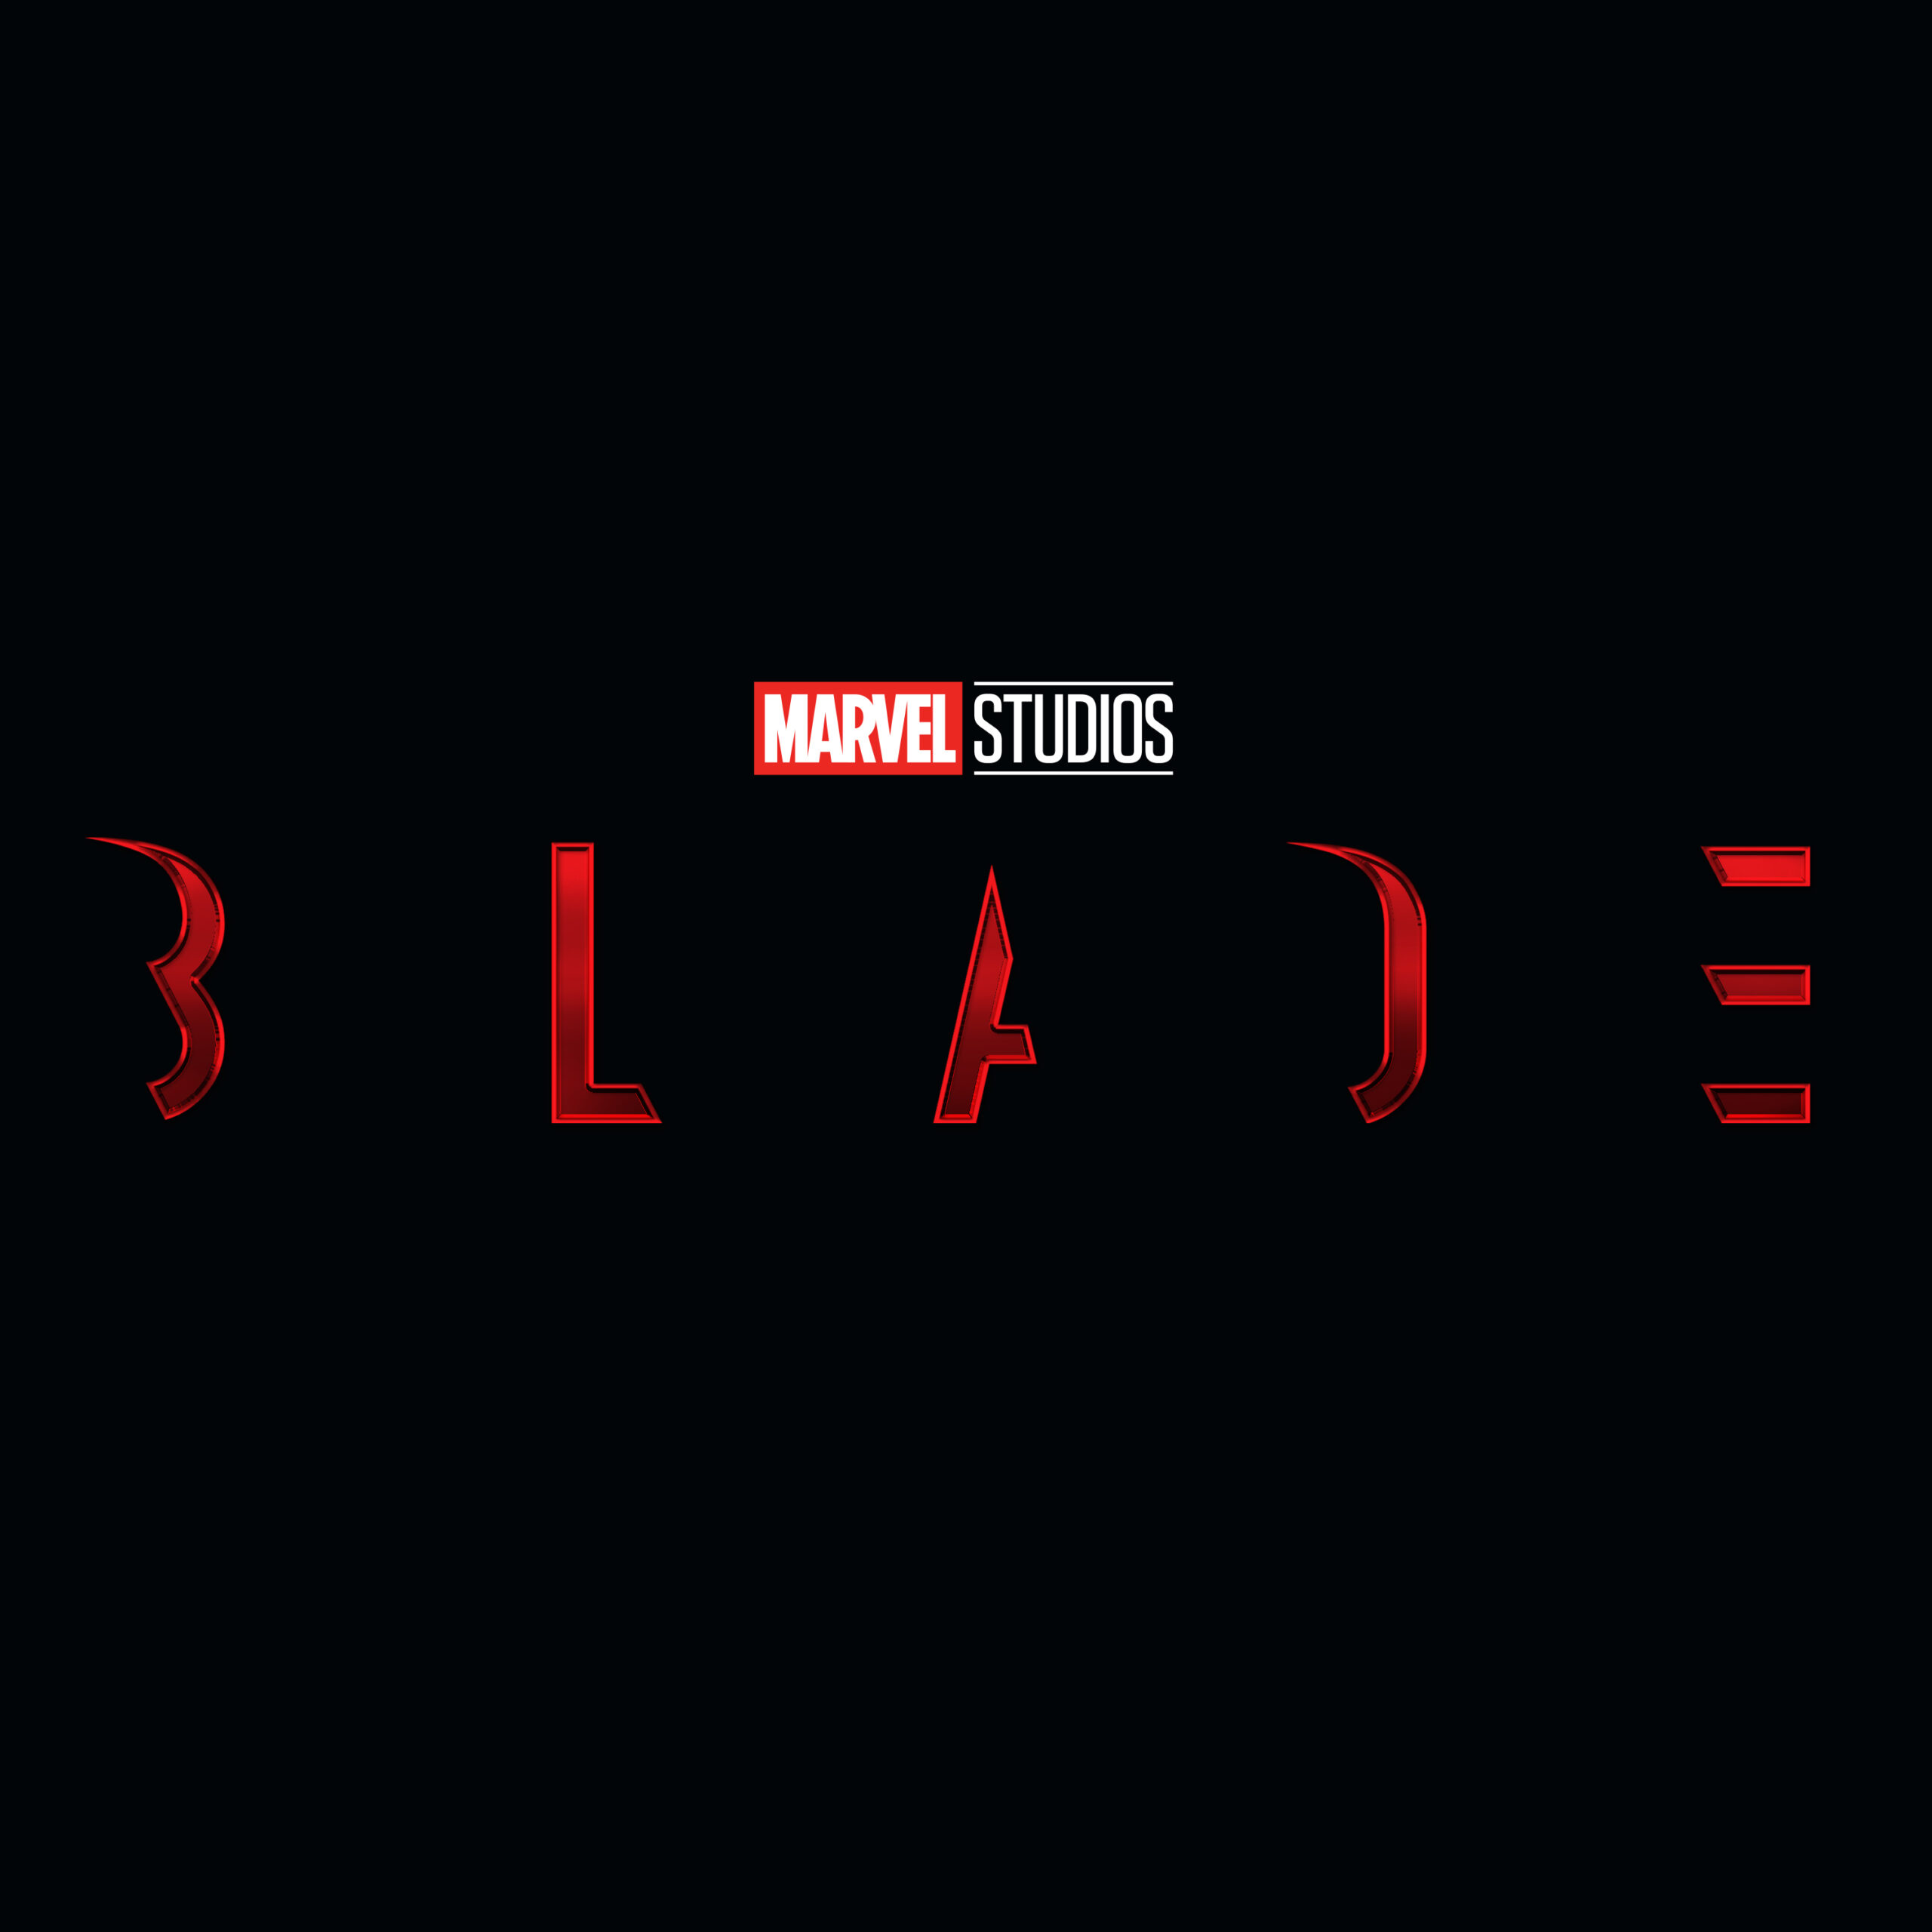 Black Panther Costume Designer Joins Blade Movie | Barside Buzz